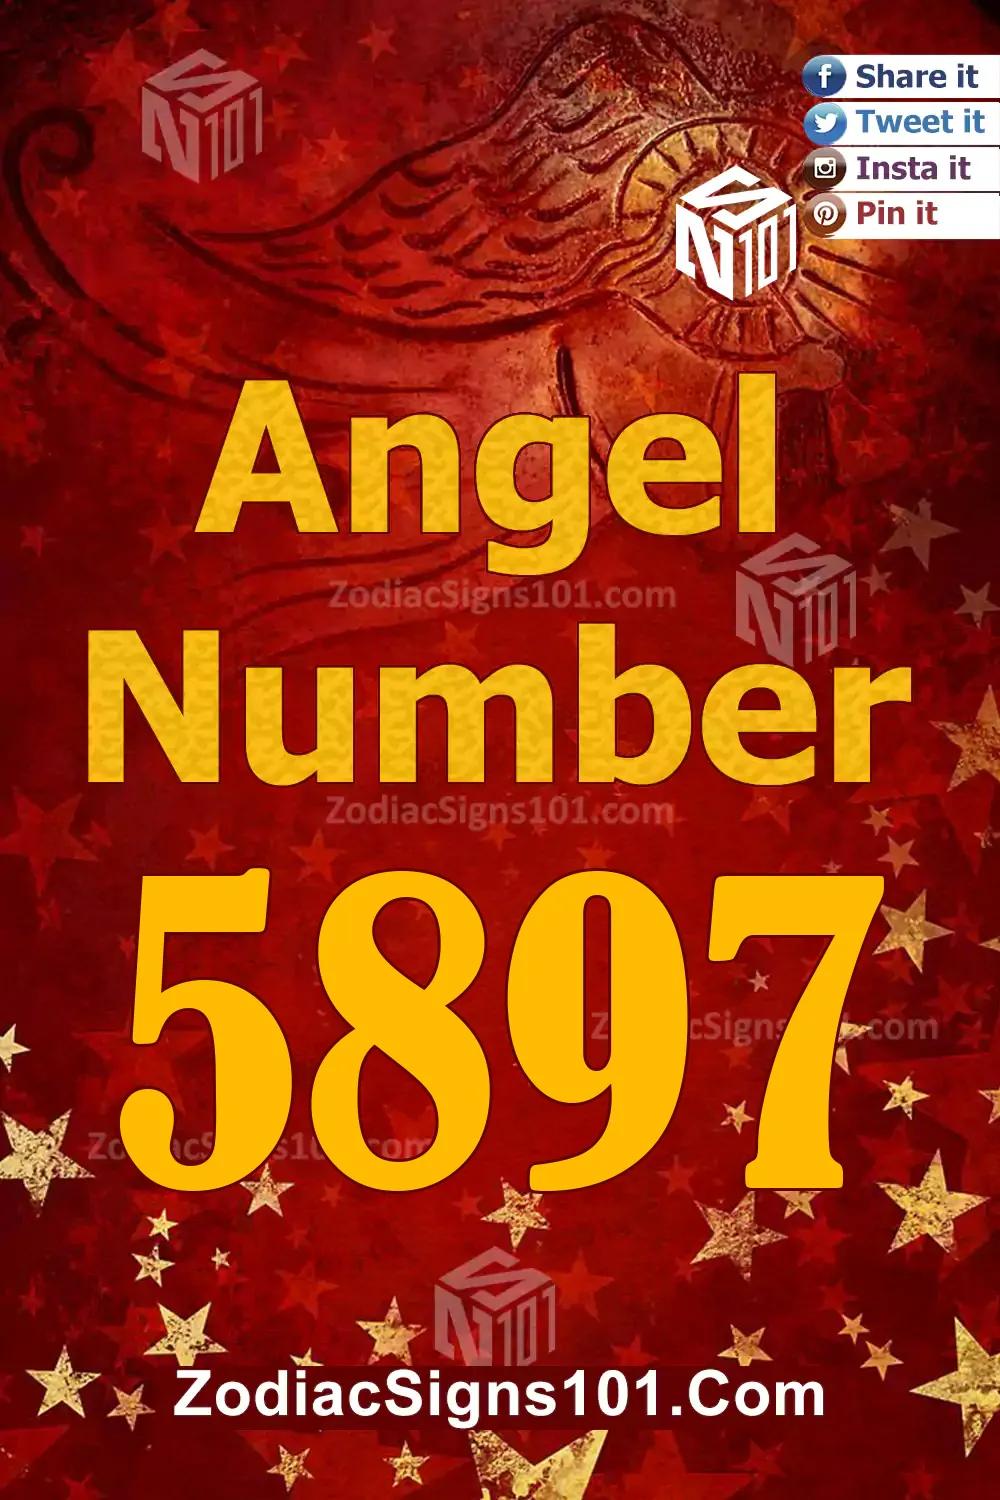 5897-Angel-Number-Meaning.jpg